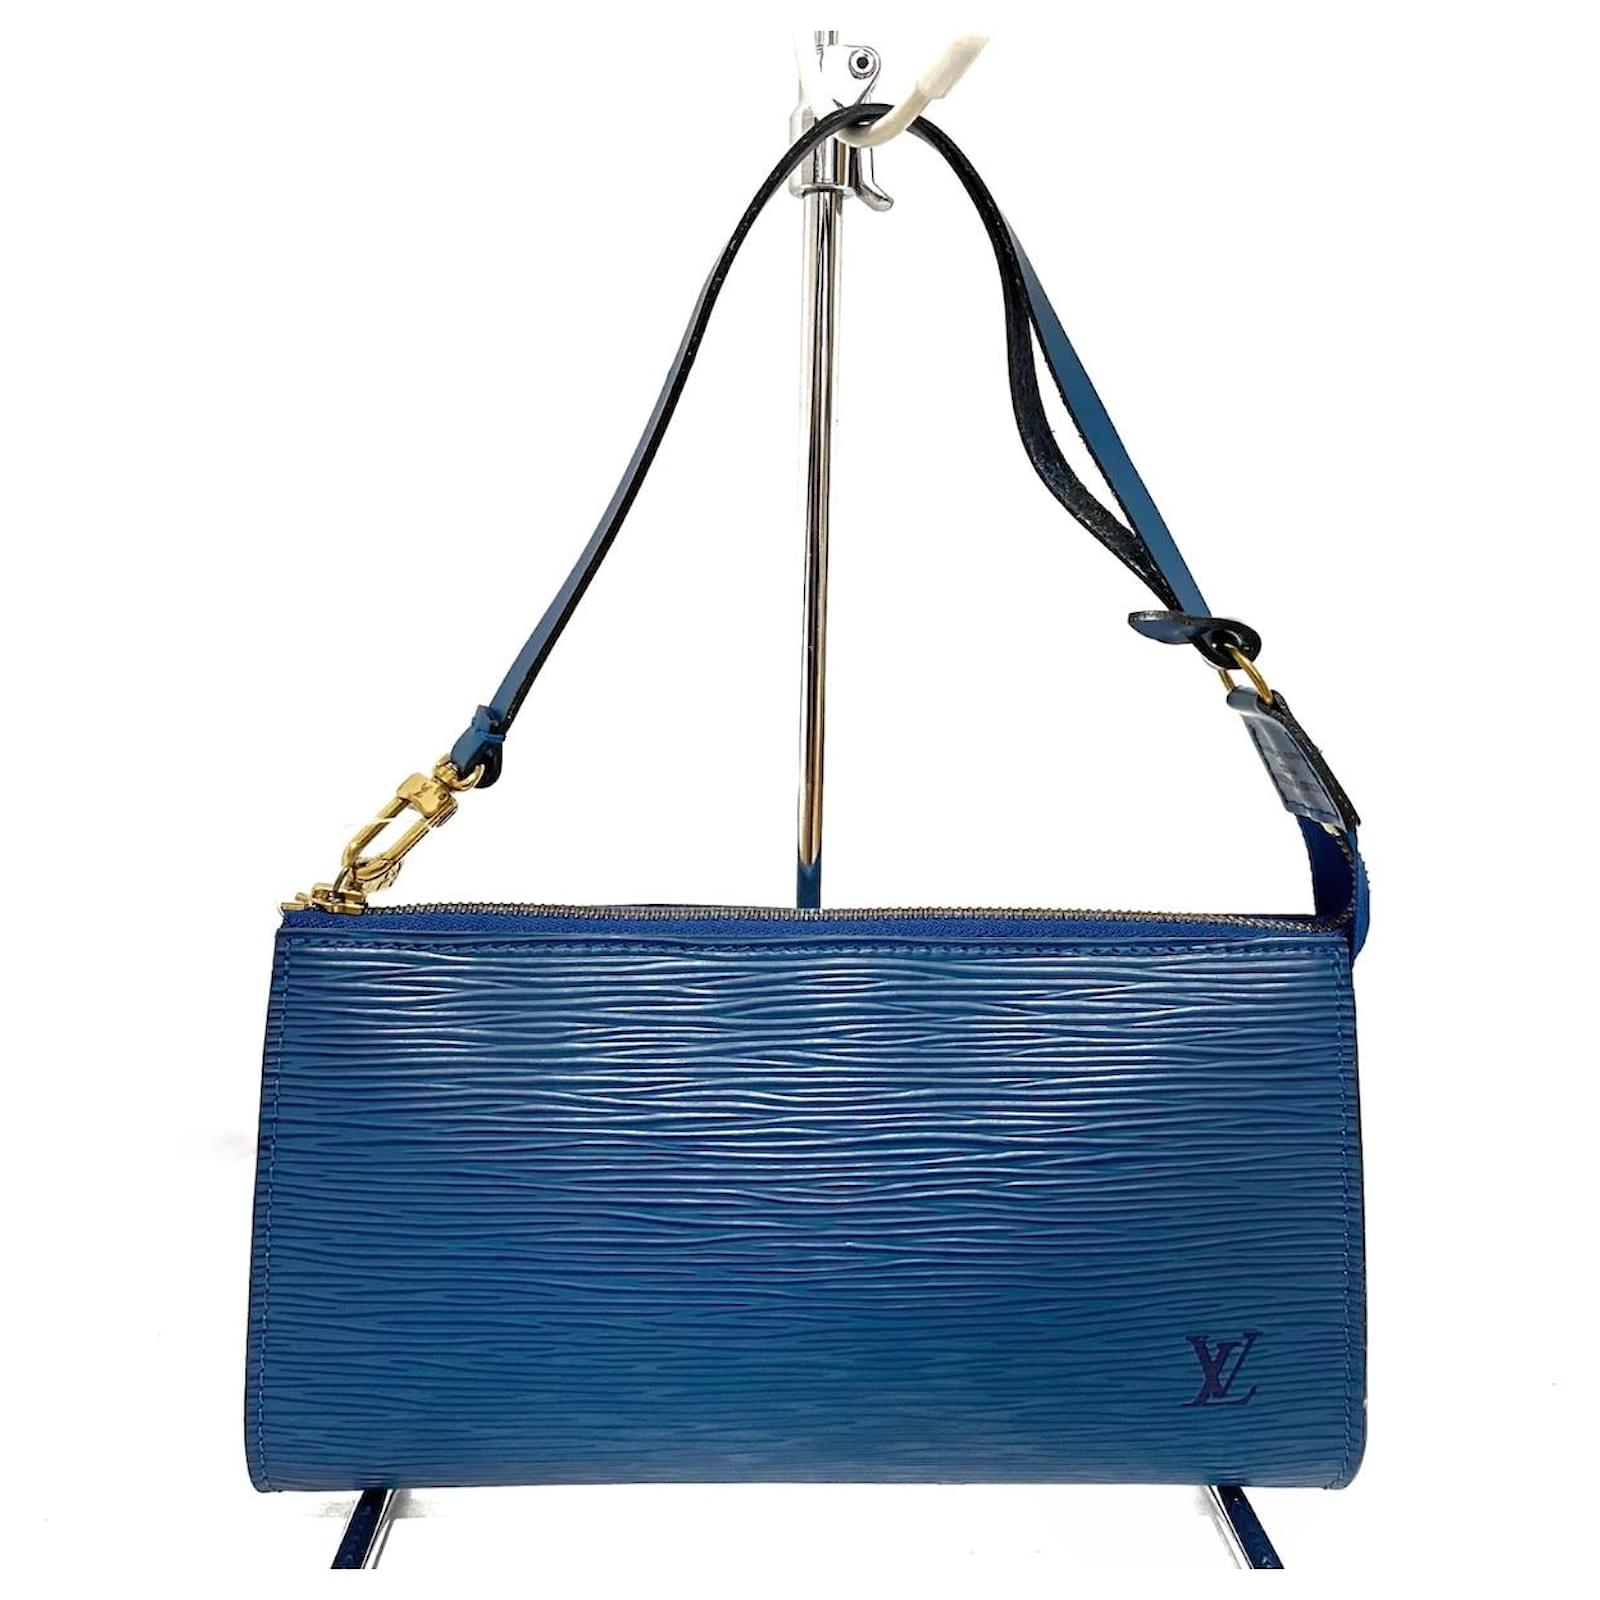 Louis Vuitton Pochette Blue Clutch Bags & Handbags for Women for